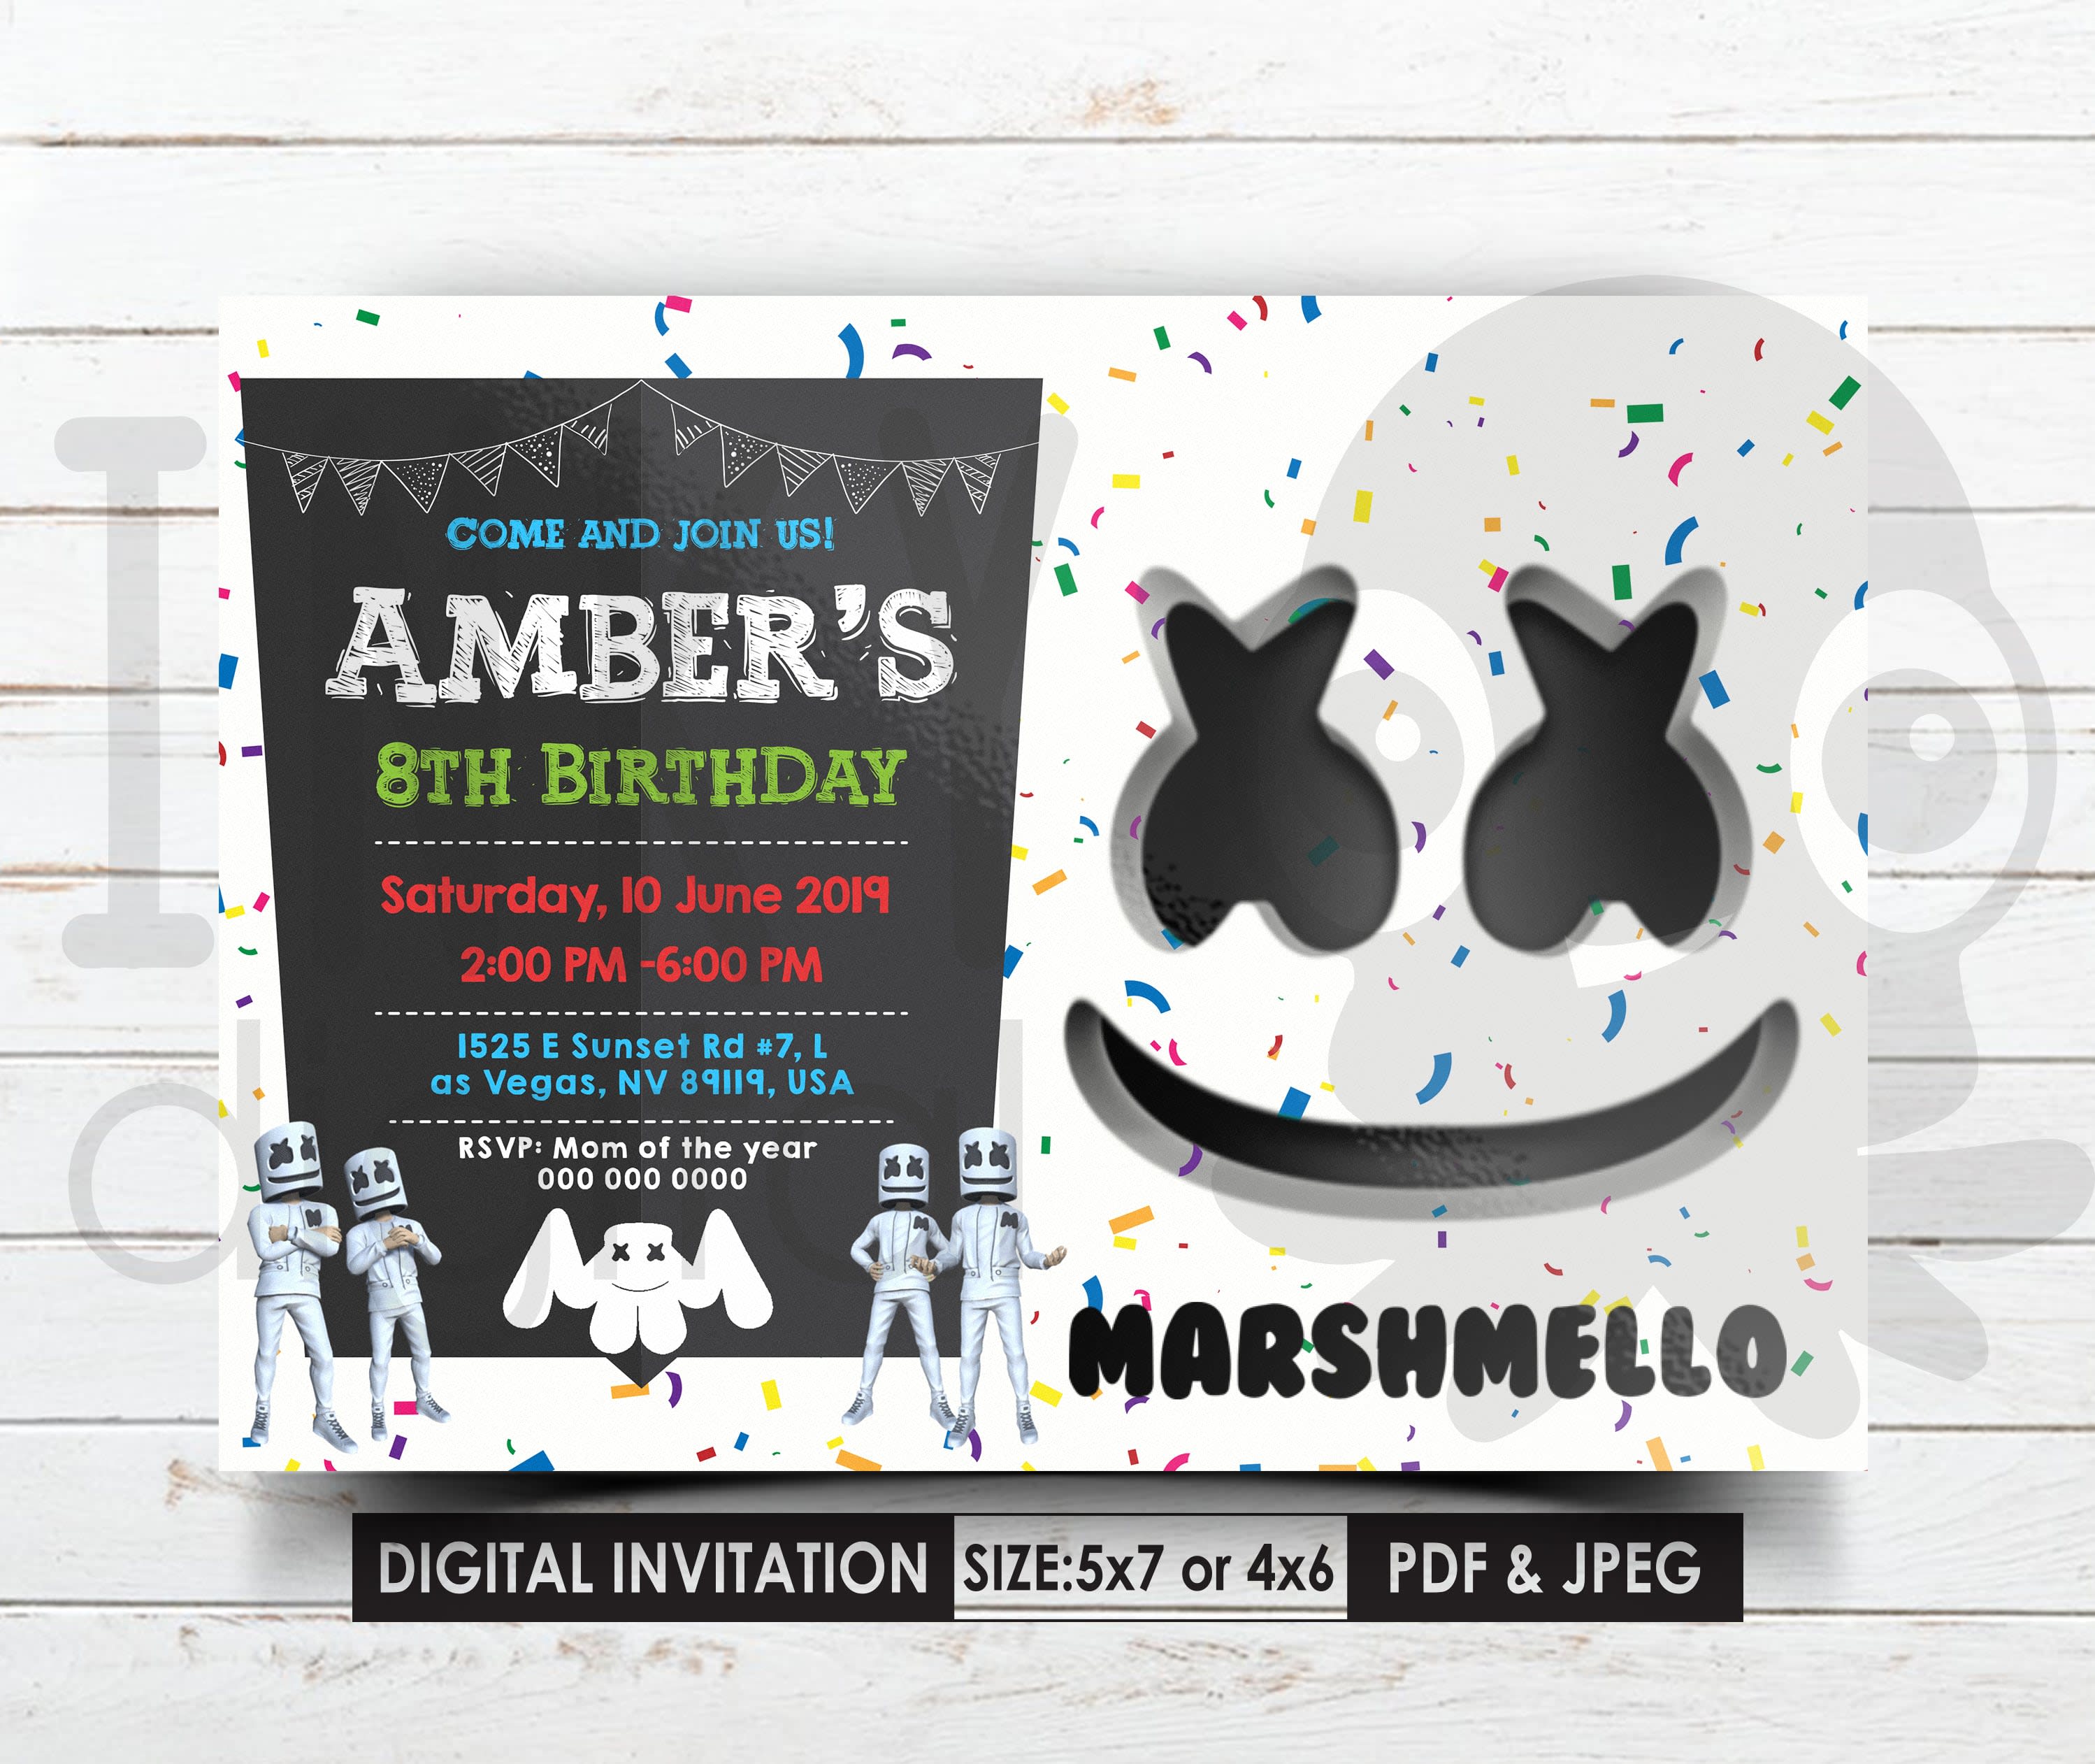 marshmello-invitation-marshmello-party-dj-birthday-prints-art